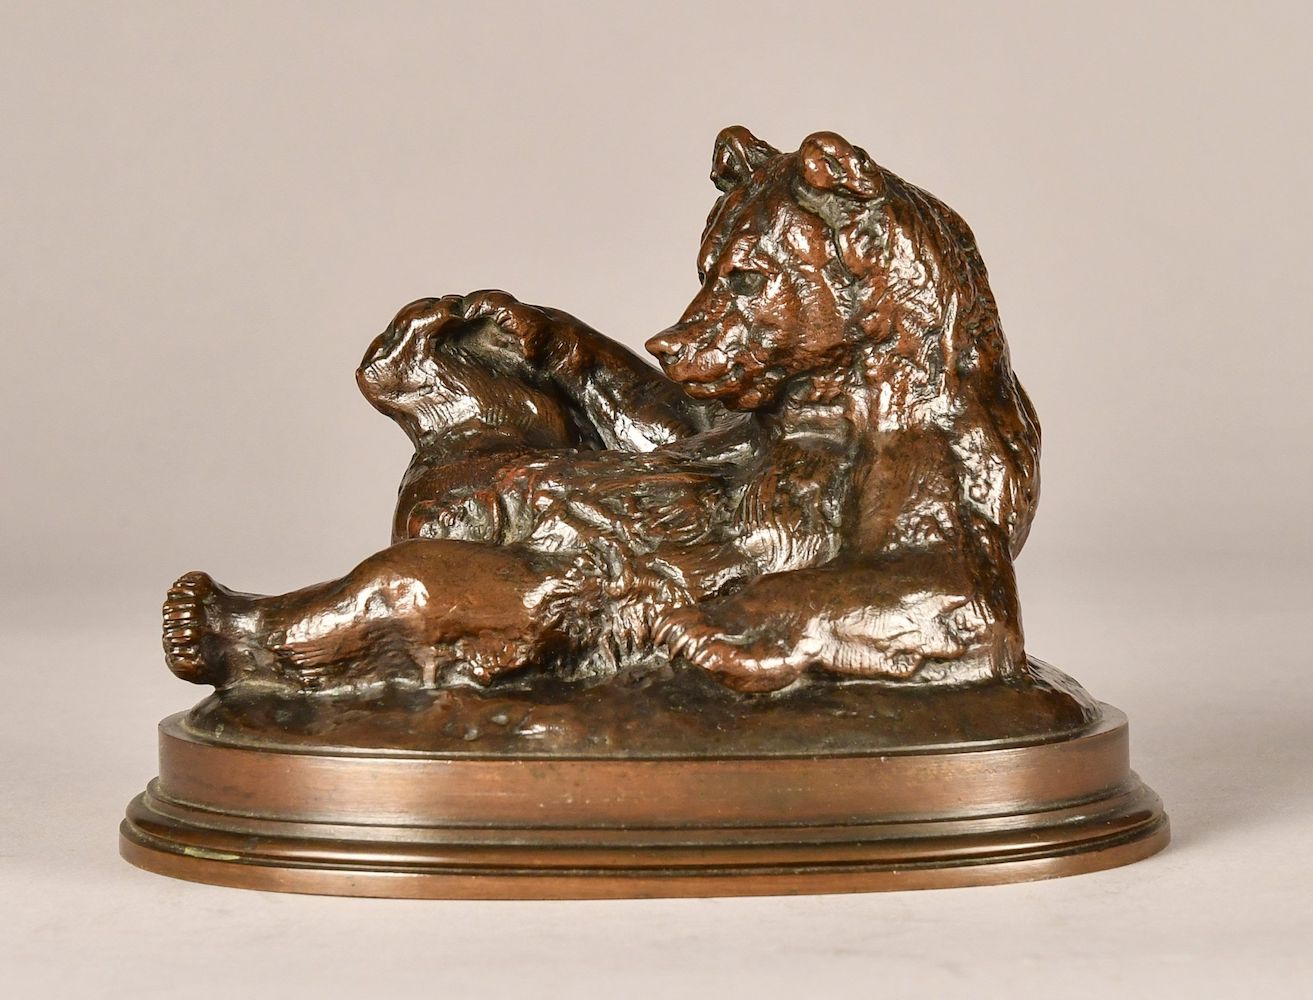 Antoine-Louis Barye (1795-1875), Seated Bear, 1833, Bronze, 5 3/4 x 8 x 5 7/8 inches